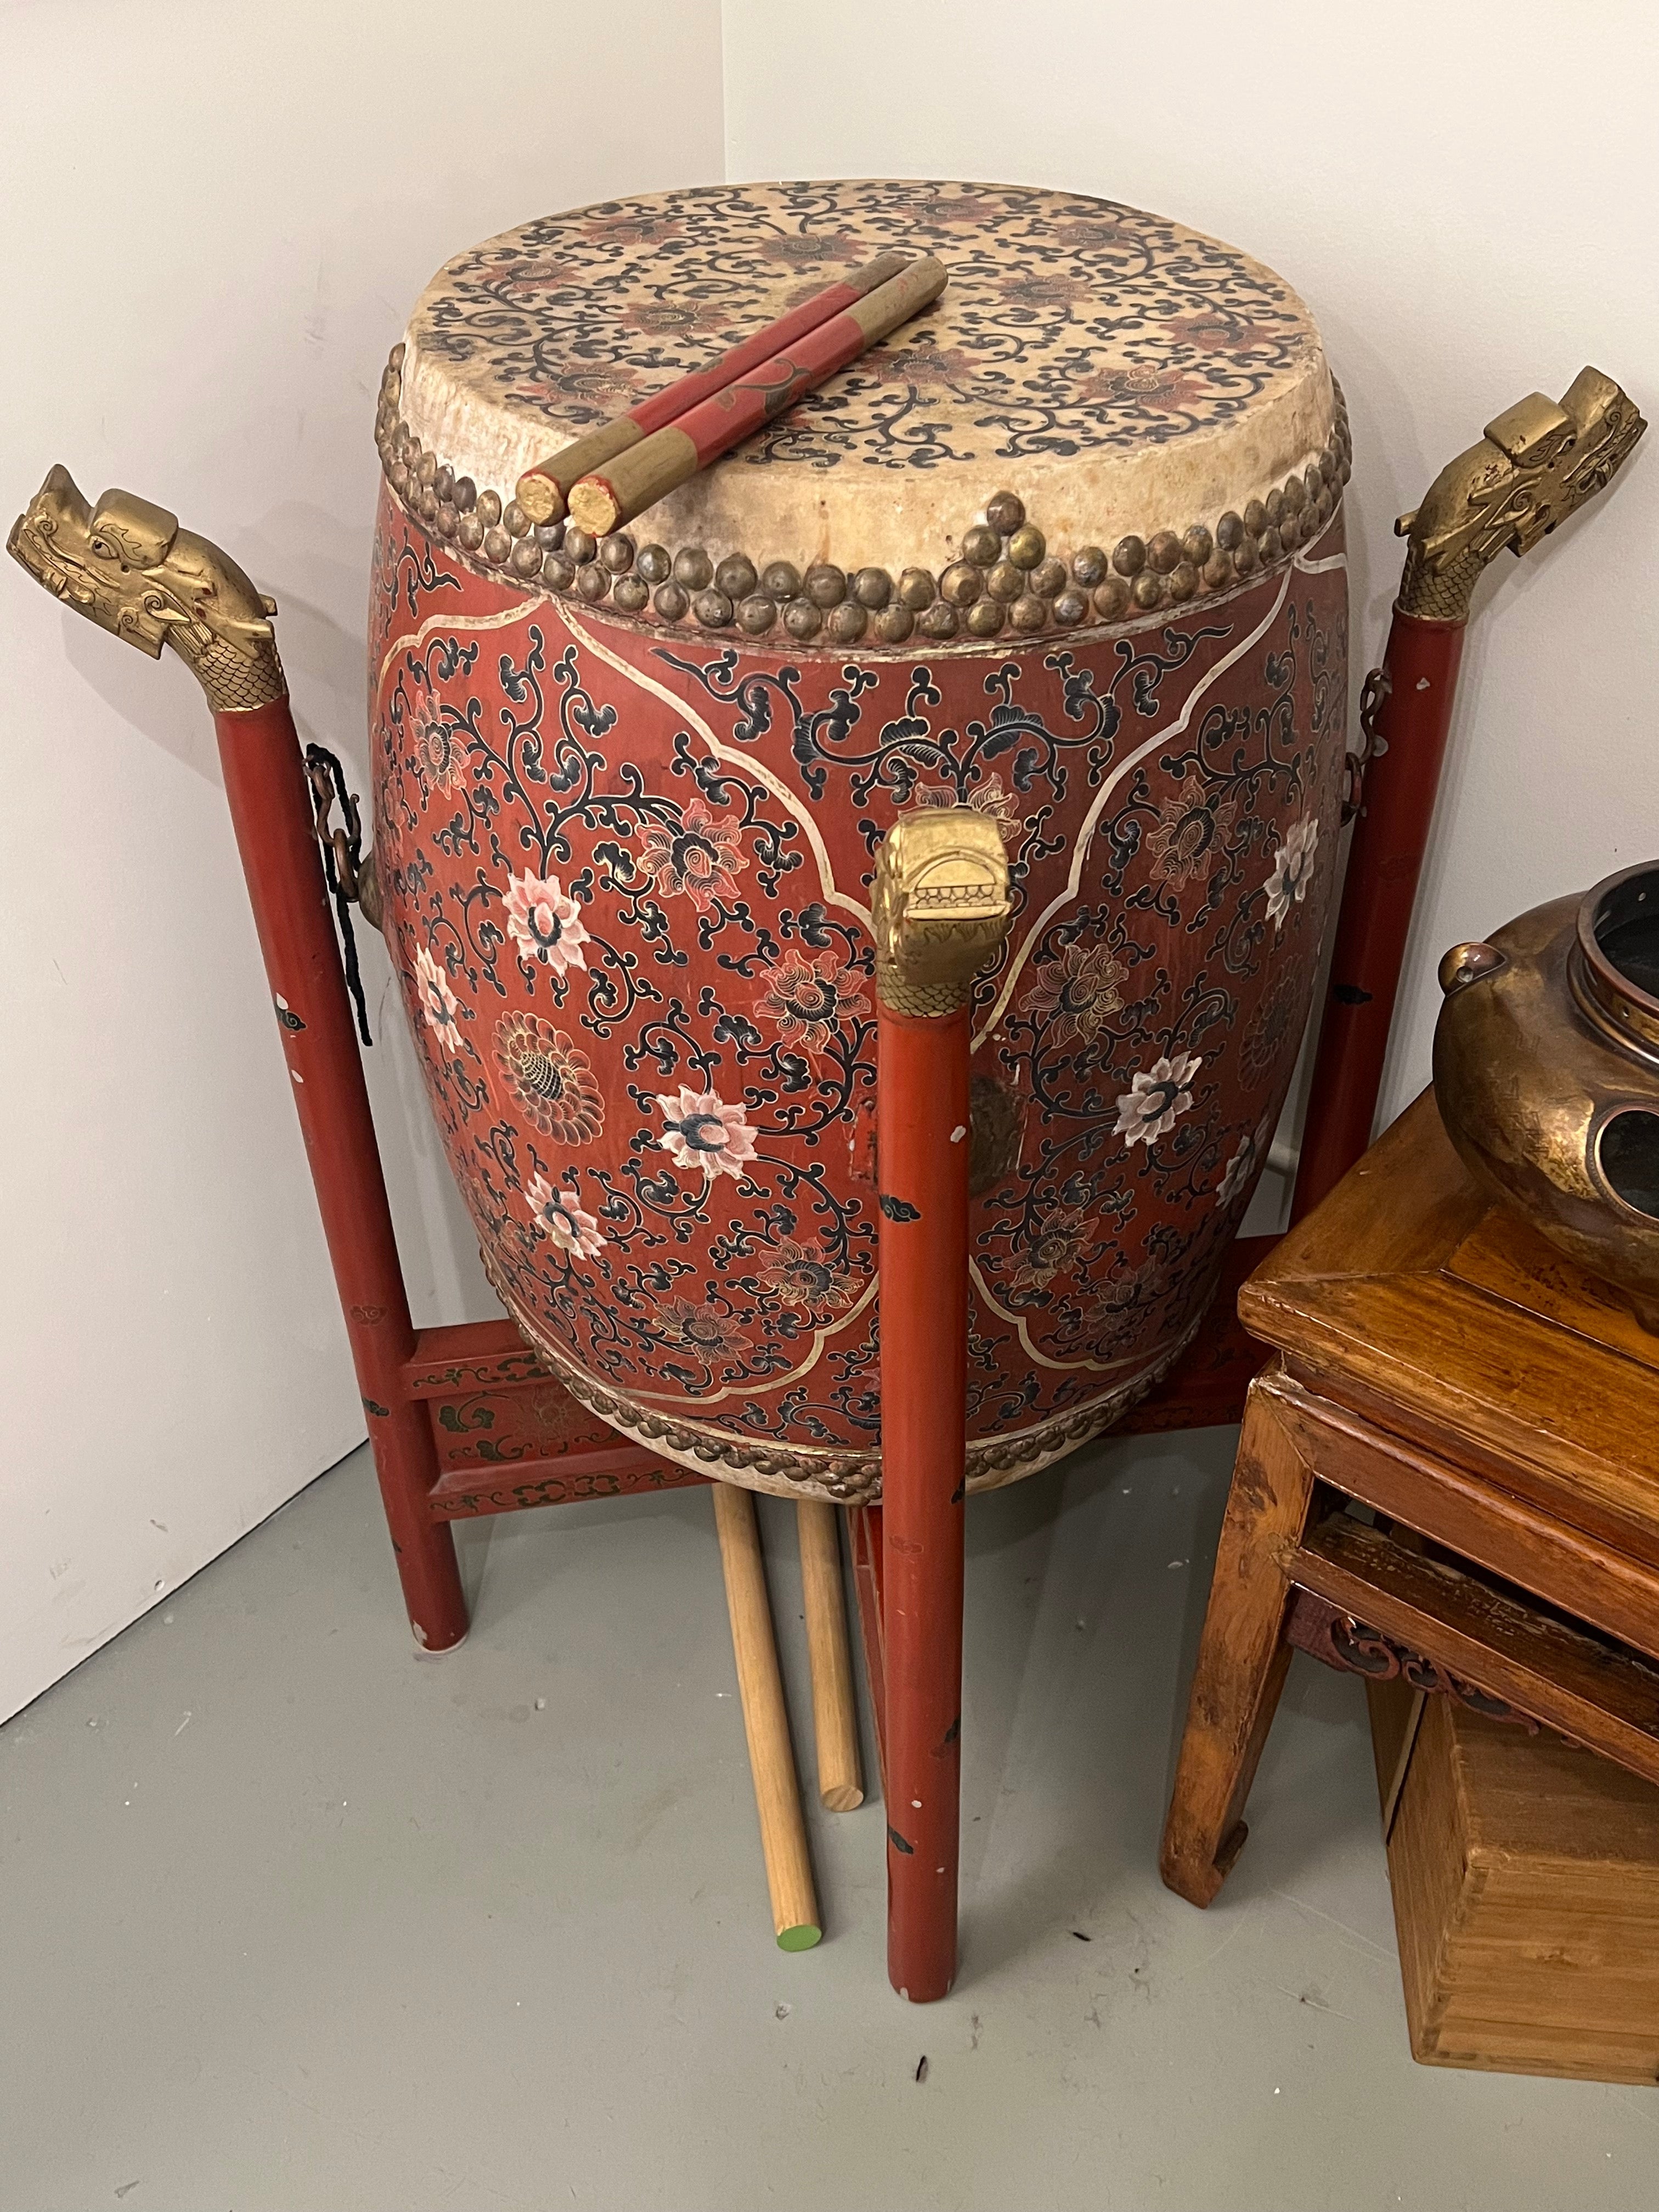 Vintage Taiko Drum in Chinese Motifs w/ Stand Sticks Accessories 26